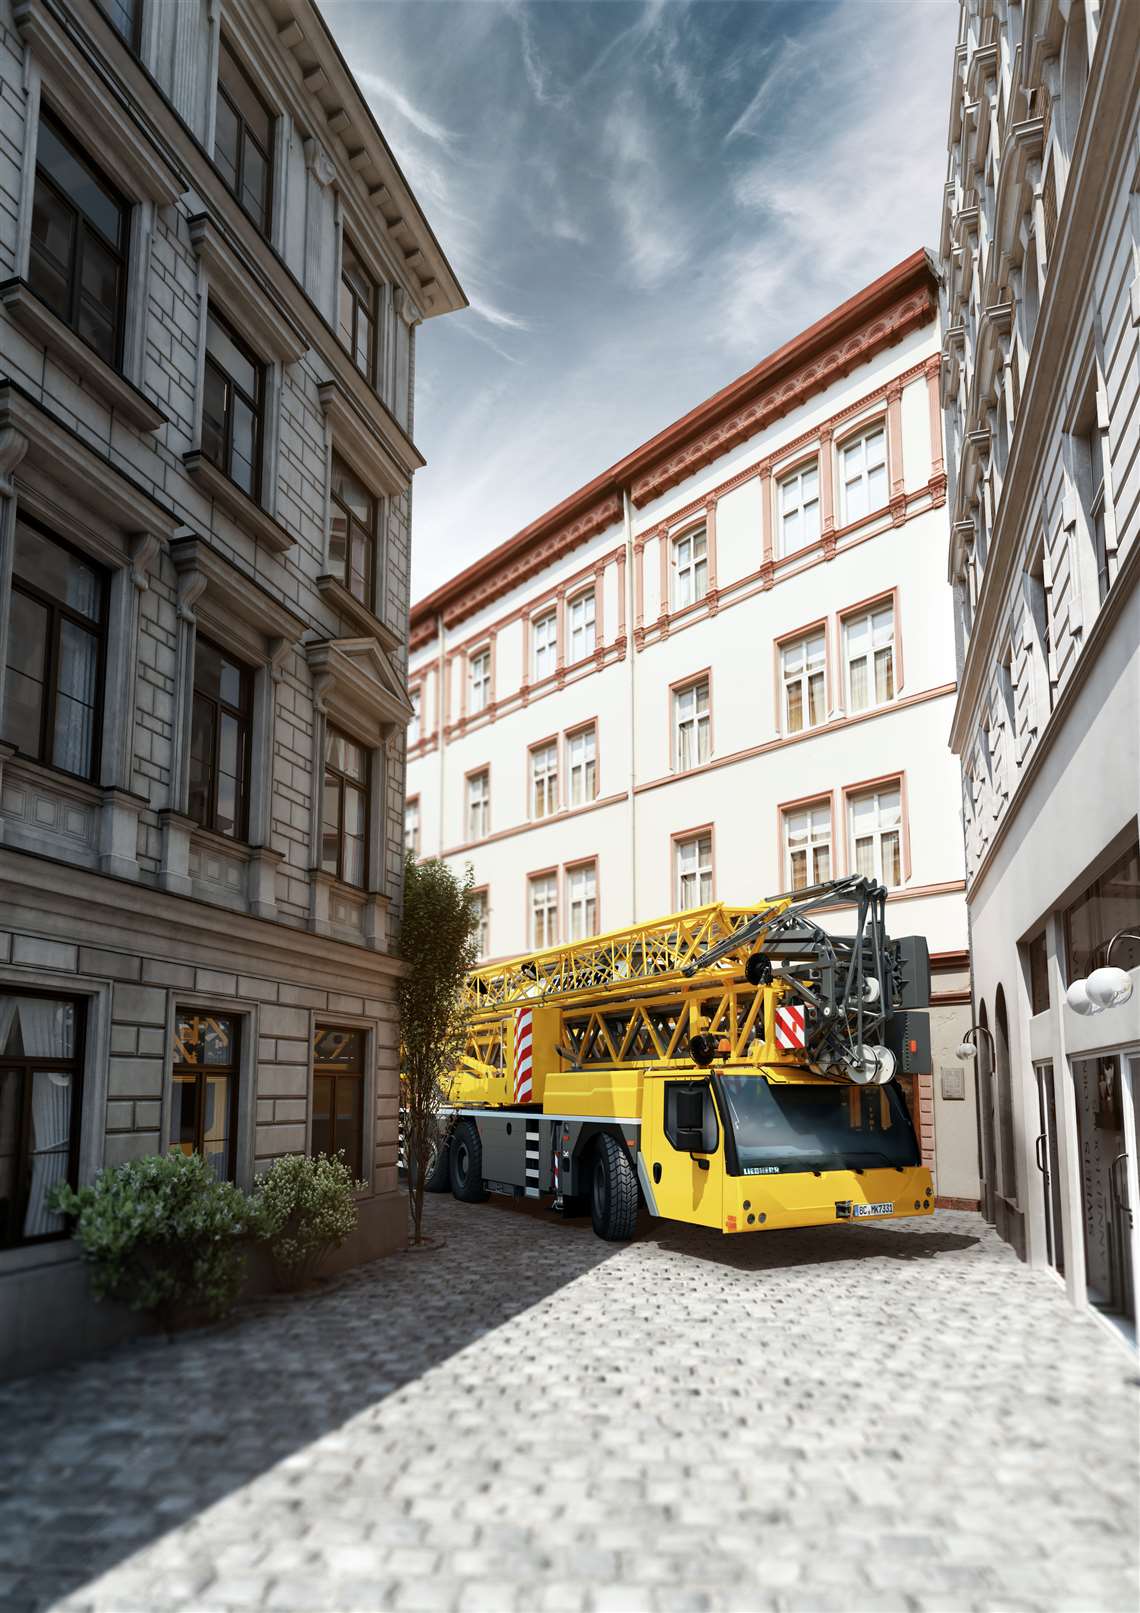 Liebherr's MK 73-3.1 mobile folding construction crane in yellow negotiating a narrow city street